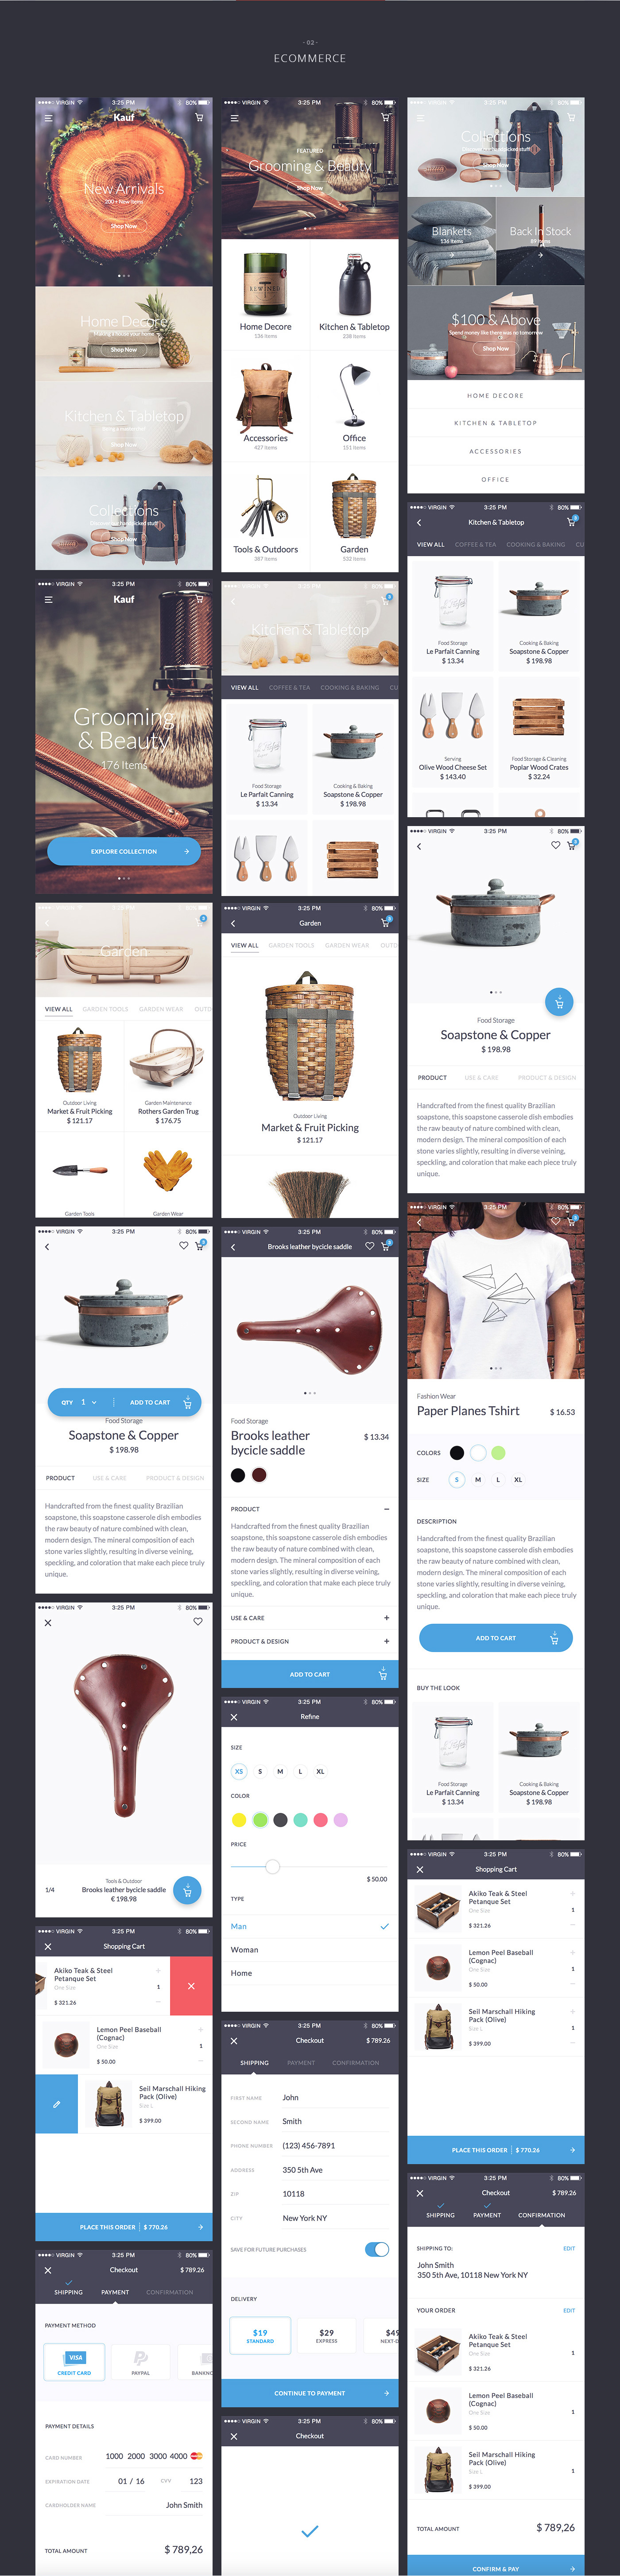 UI ux mobile app ui kit iOS App mobile design Ecommerce social reader mobile interface sketch sketch resources Mobile UI Kit ui ux